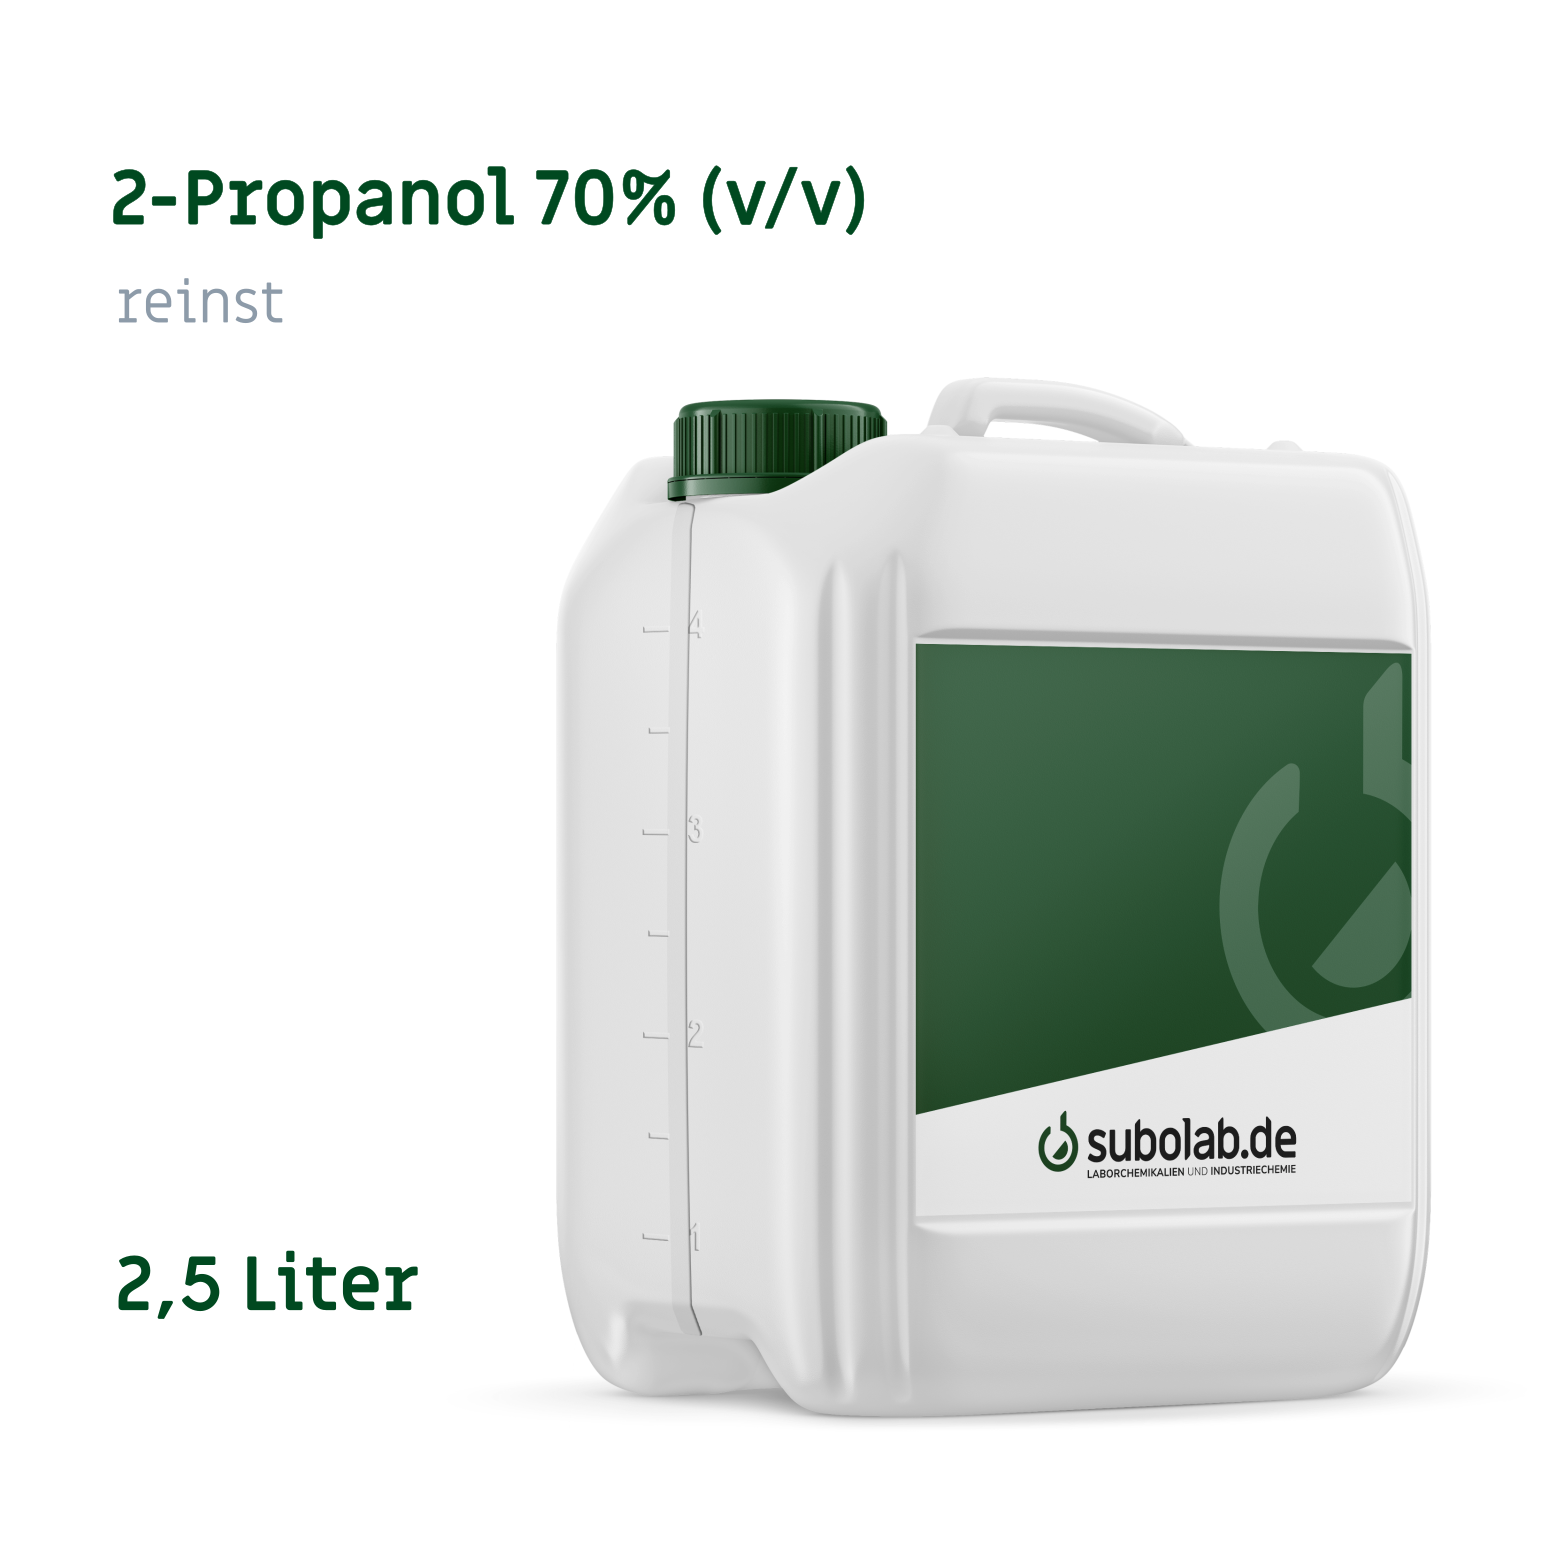 Bild von 2-Propanol 70% v/v reinst (2,5 Liter)